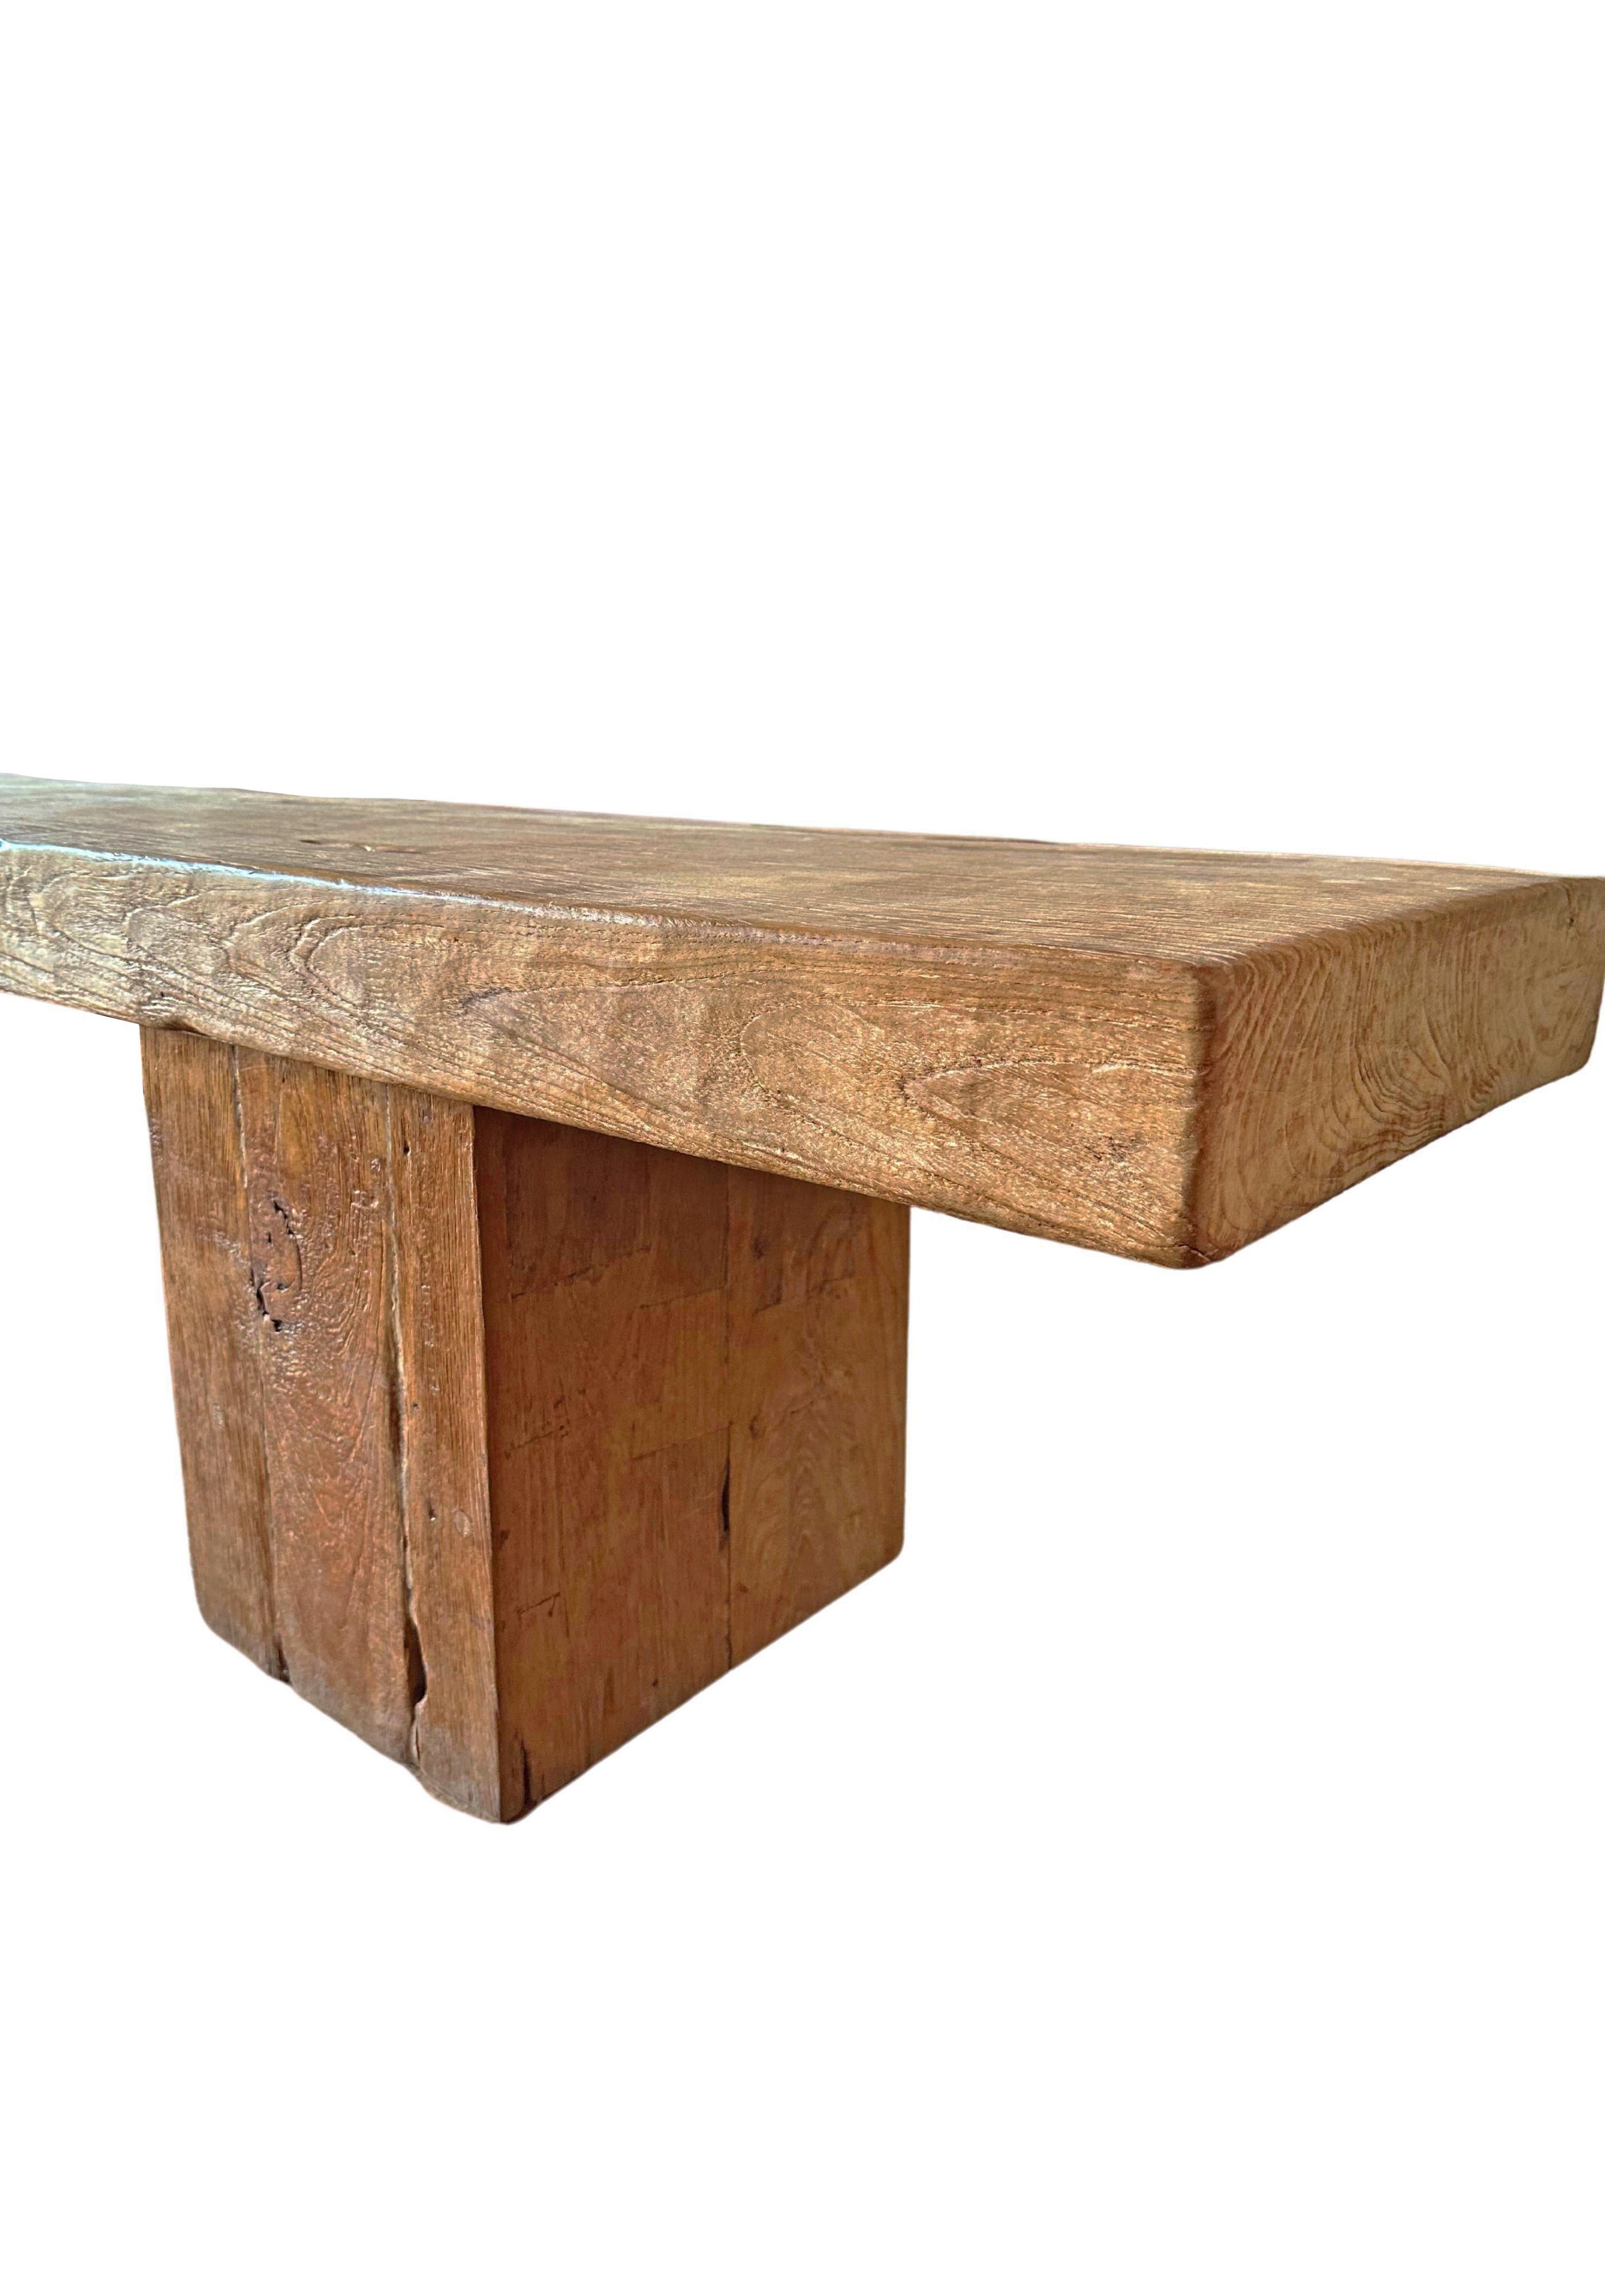 Indonesian Solid Teak Wood Sculptural Bench, Modern Organic For Sale